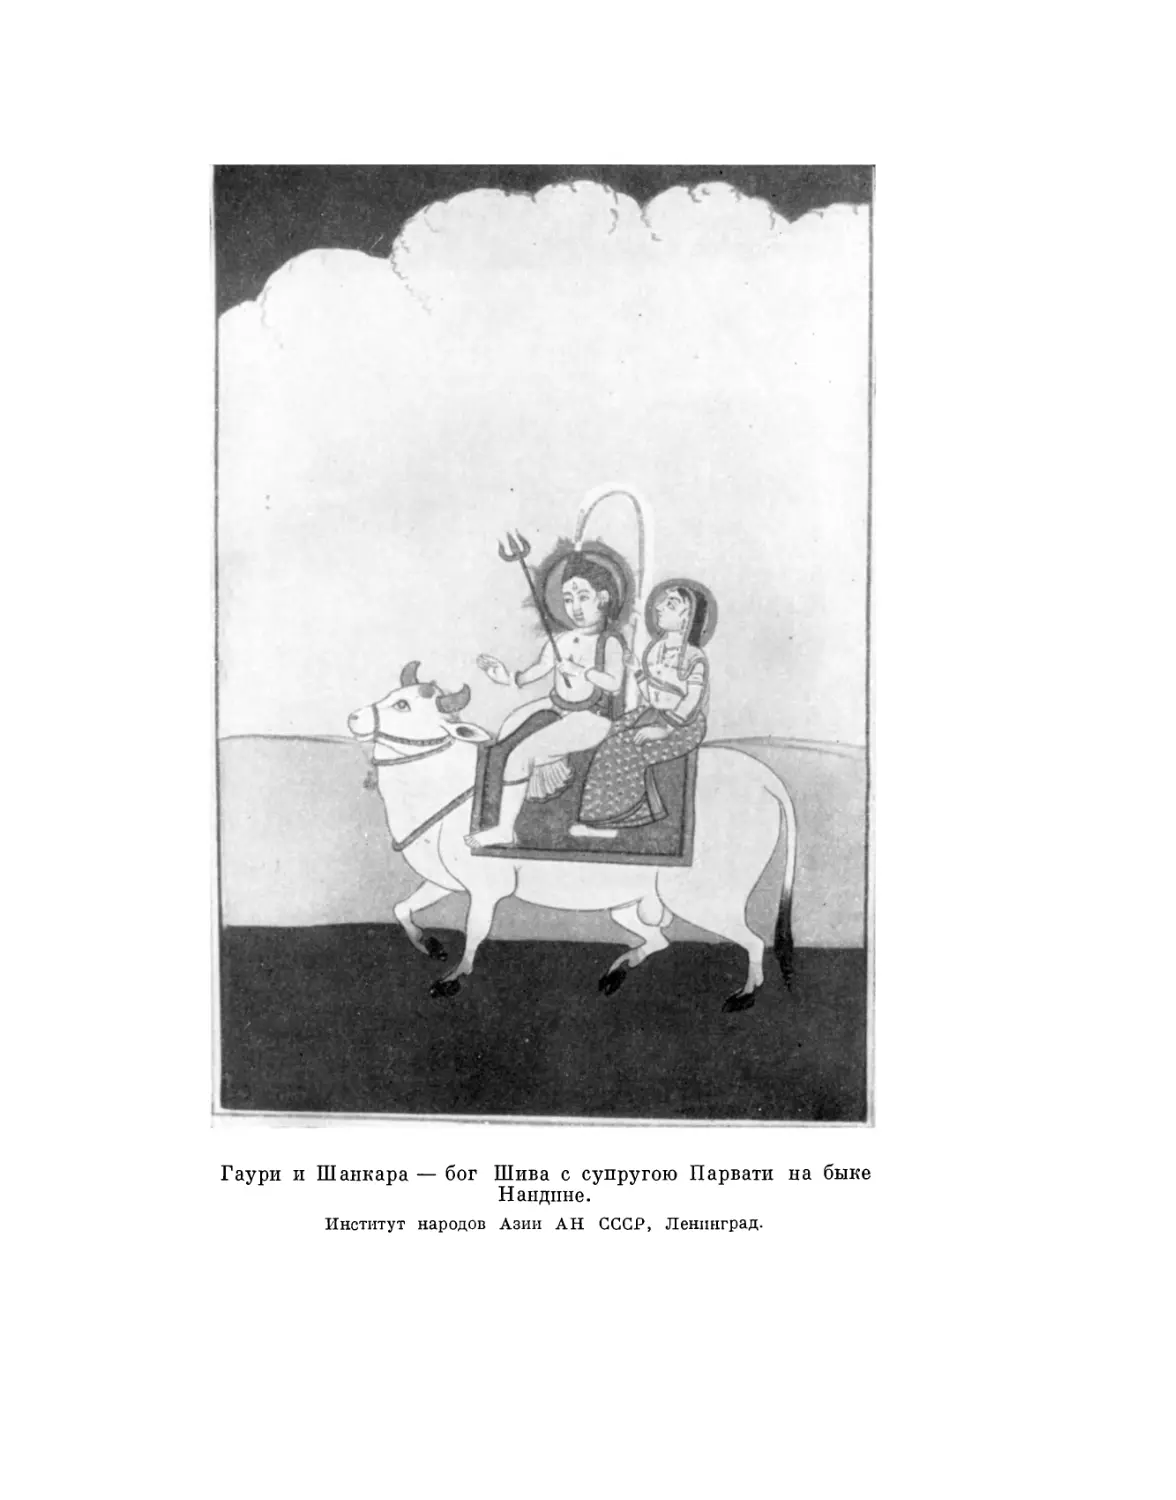 Вклейка. Гаури и Шанкара — бог Шива с супругою Парвати на быке Нандине